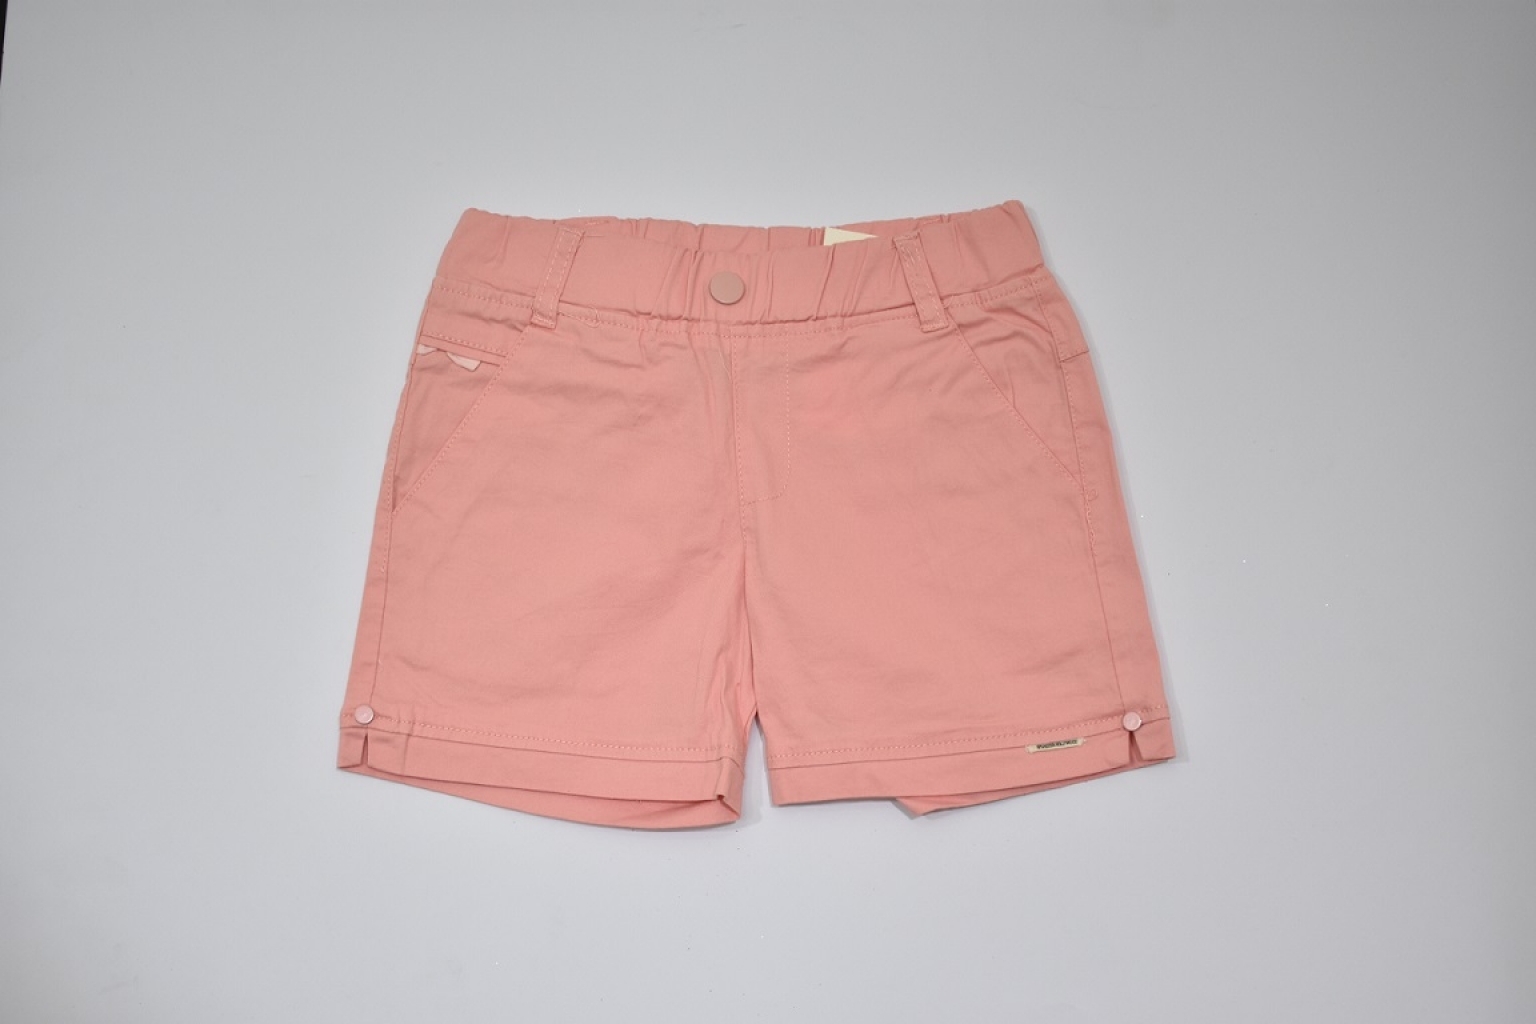 Buy Pink Cotton Shorts in Pakistan | online shopping in Pakistan